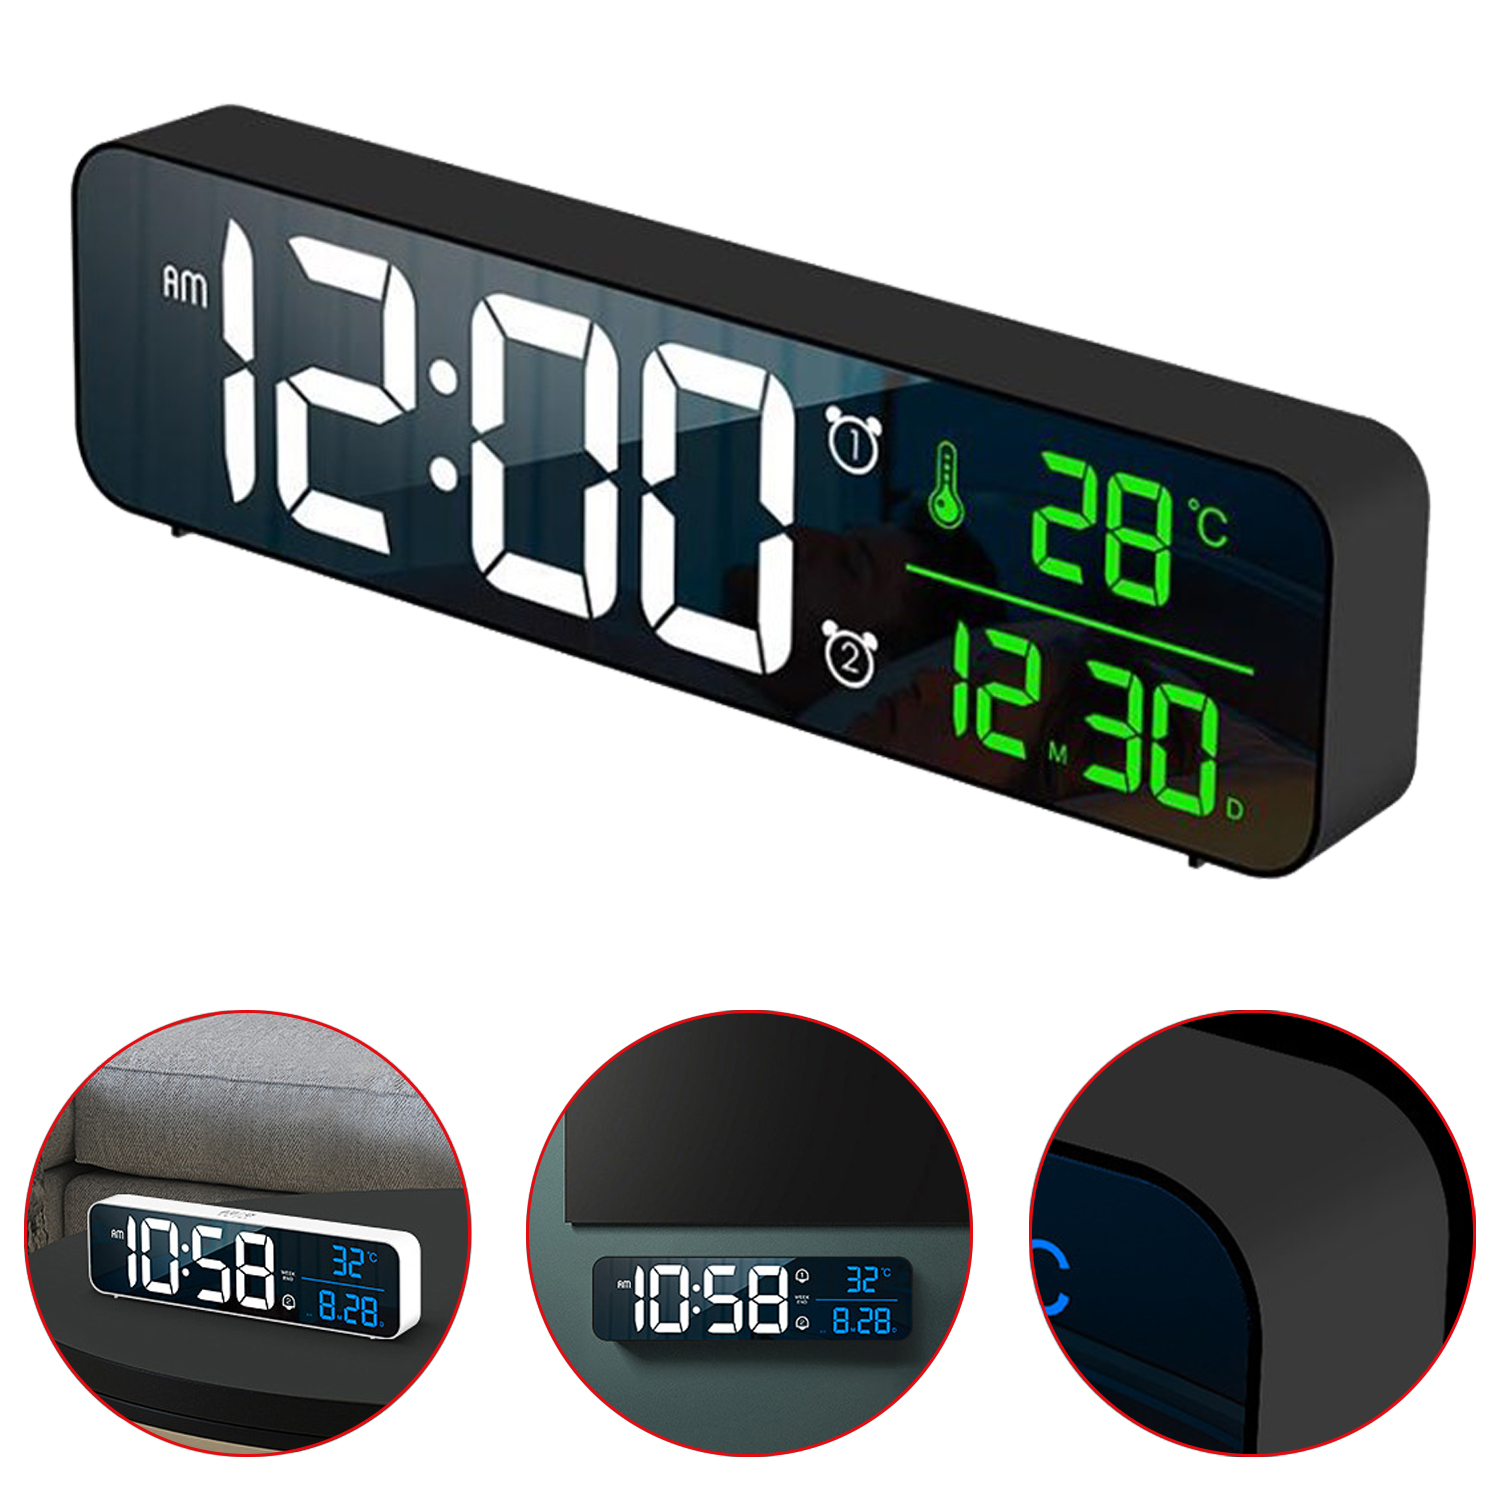 LED Digital Alarm Clock Snooze Temperature Date Display USB Desktop Strip Mirror LED Clocks for Living Room Decoration